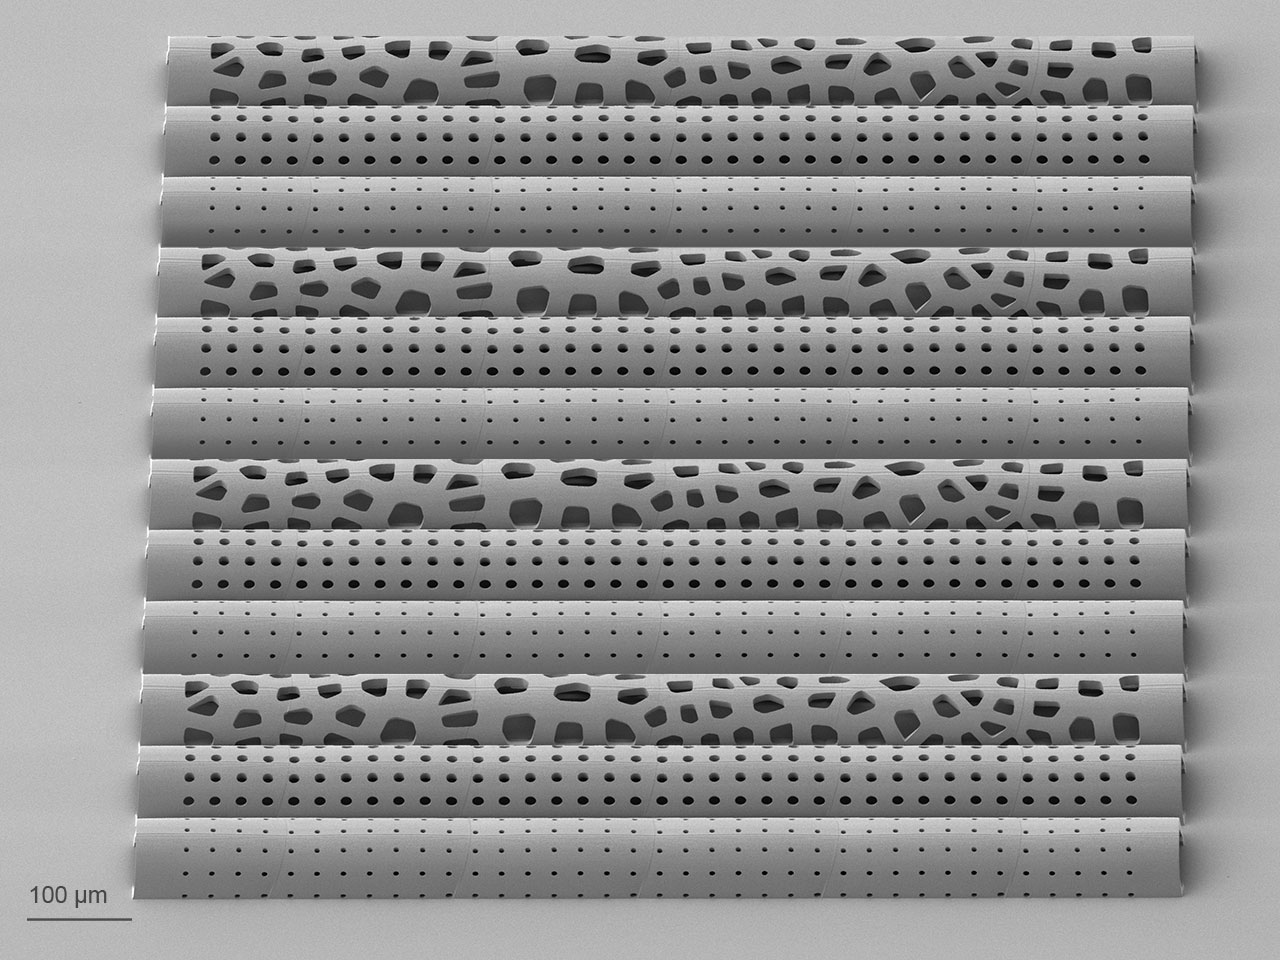 NanoscribeQuantum X 形状为一次应用提供真正的设计自由。.jpg